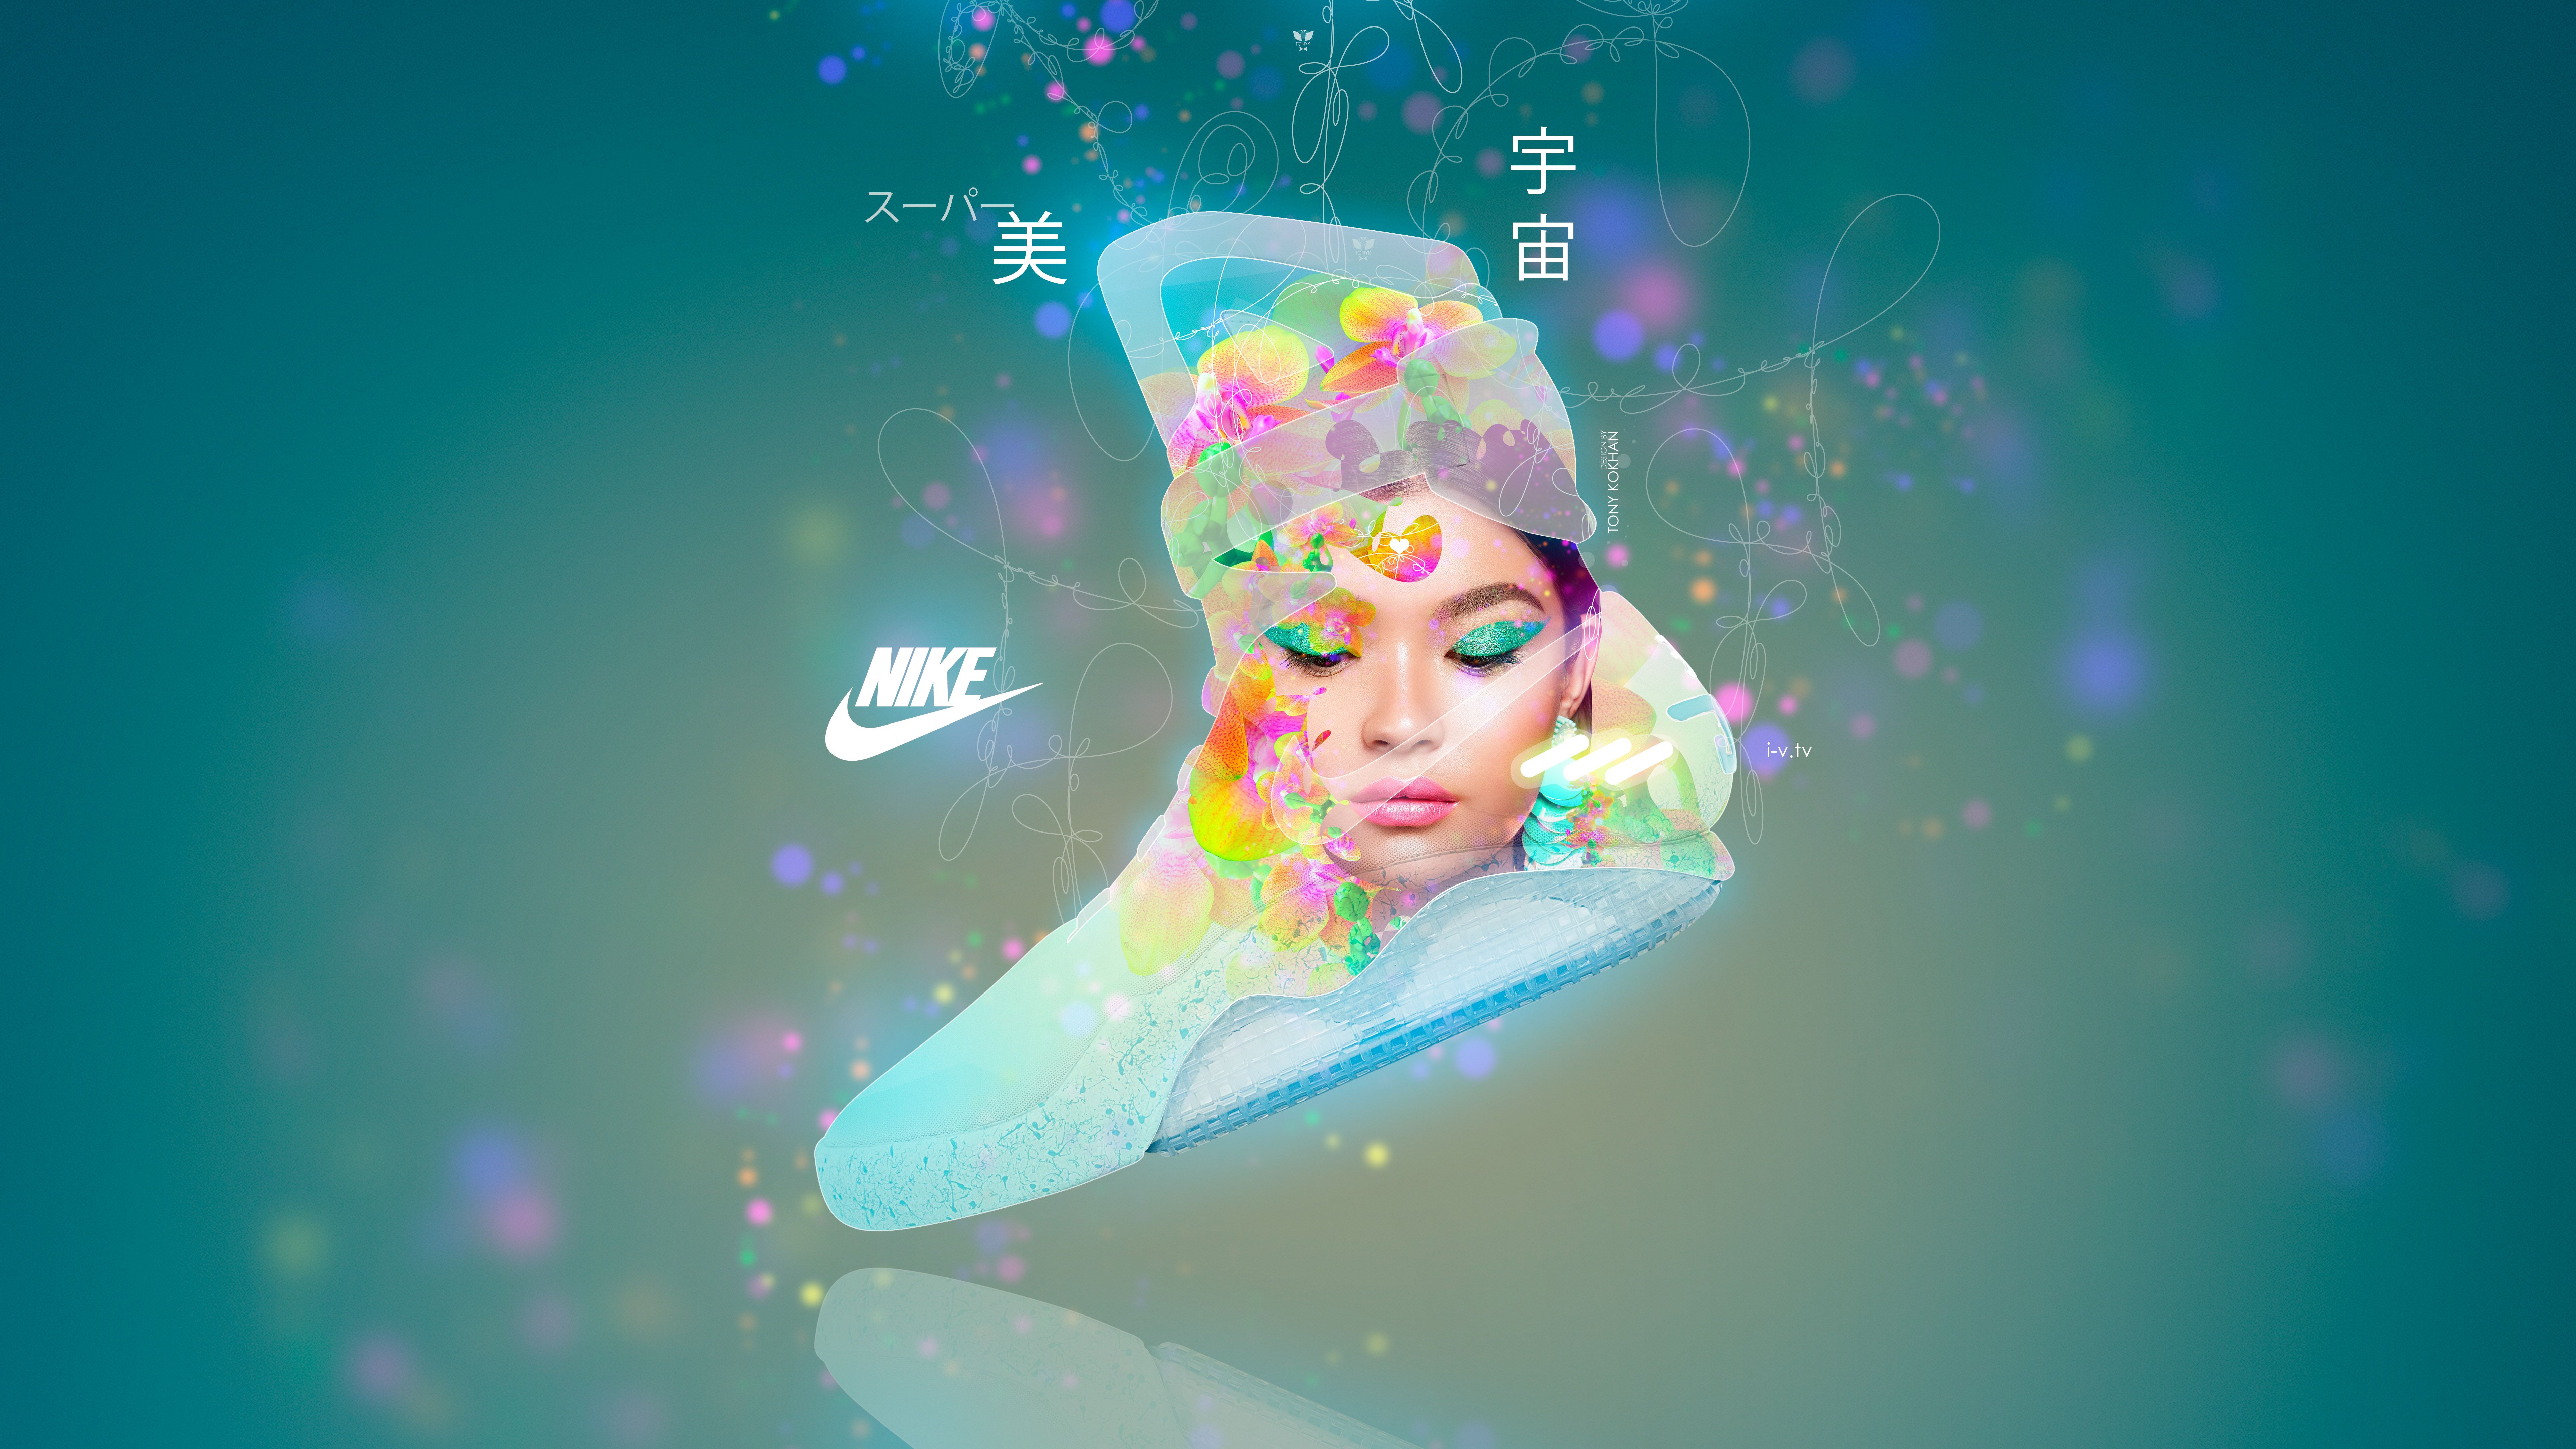 Nike Air Mag NikeTony Sneakers 003 Asian Girl Super Beauty Universe Space Star Orchid Lumia Love Art 2019